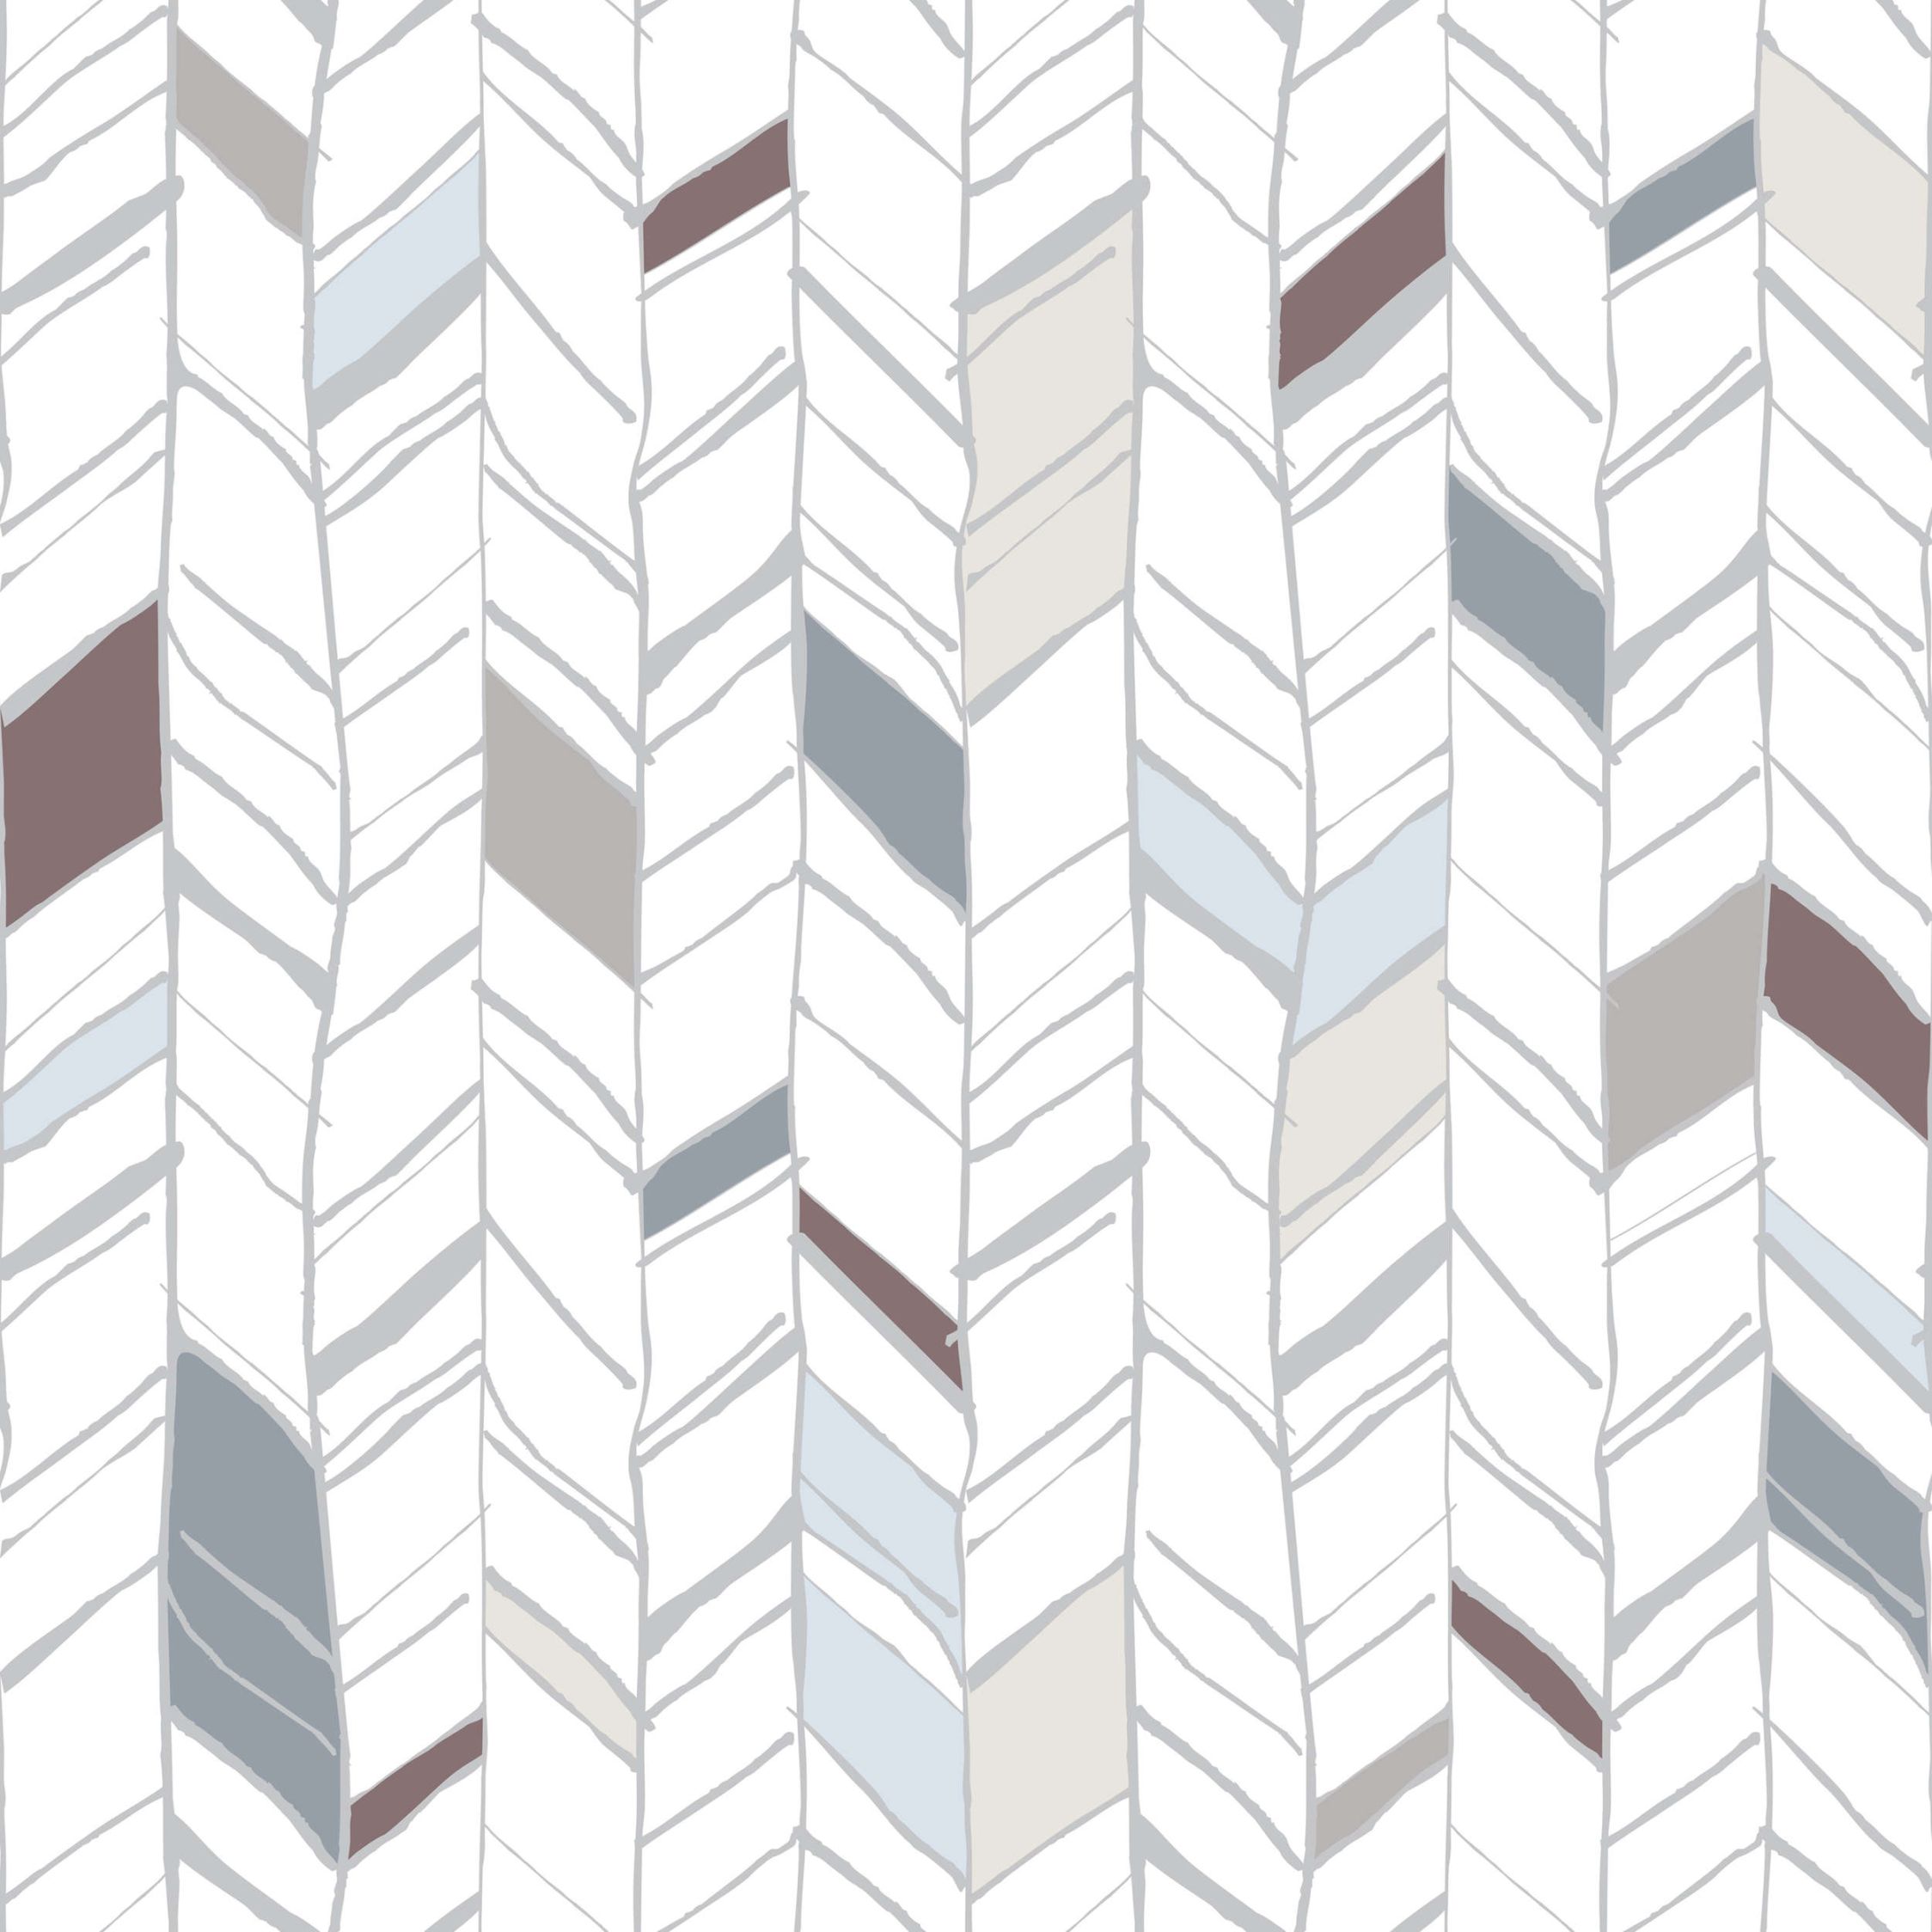             Scandi style stripe wallpaper - textured non-woven
        